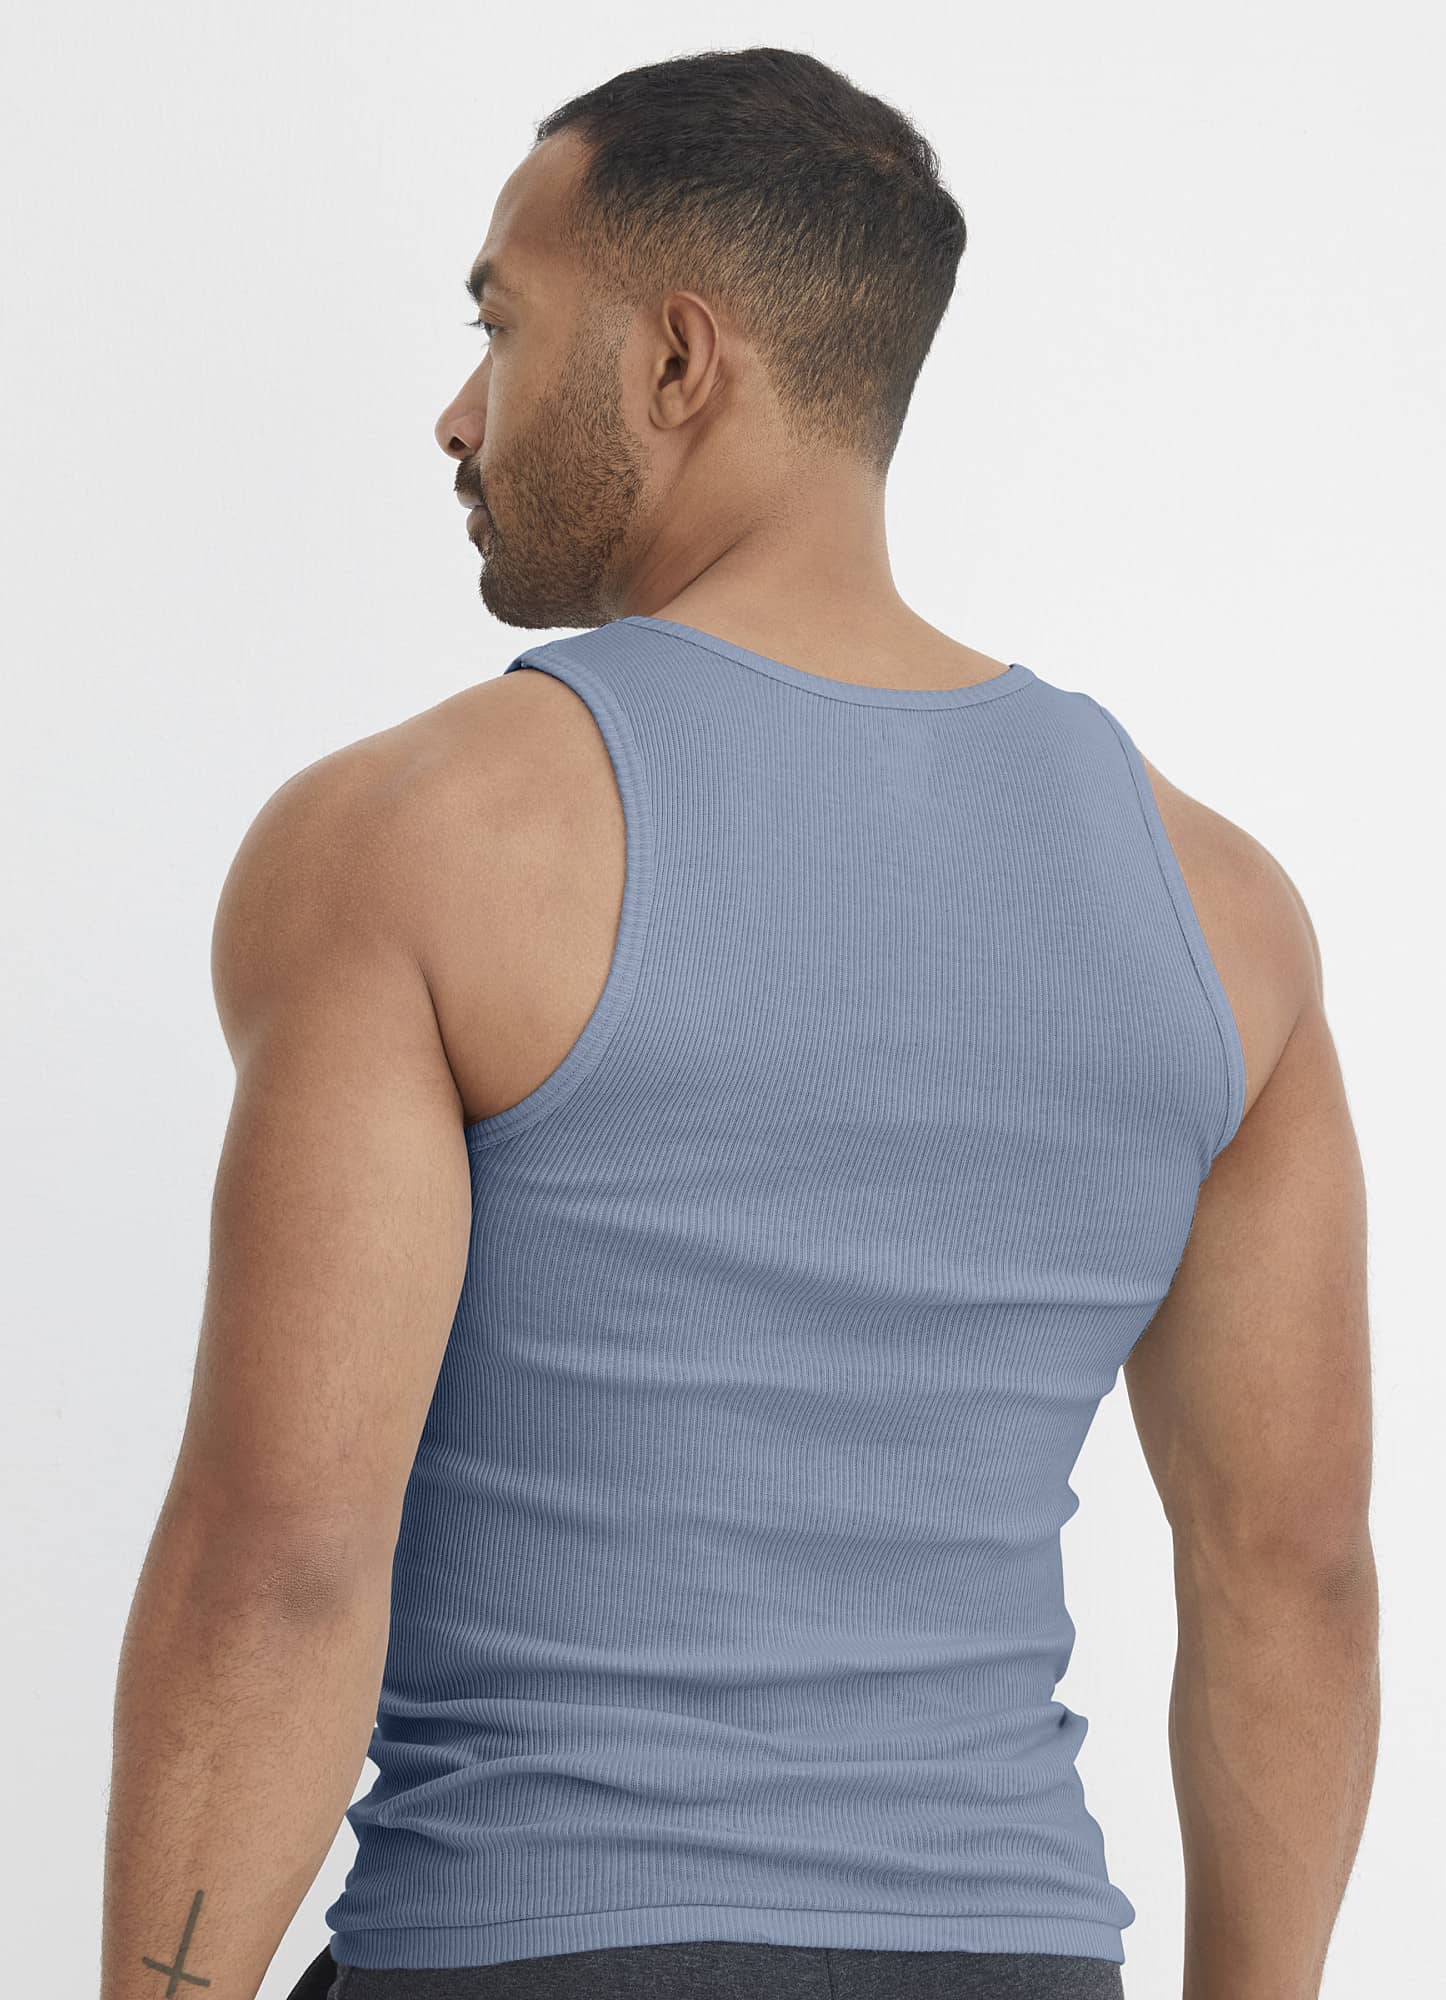 Goza Cotton A-Shirt Undershirt Tank Tops for Men (3 Pack)